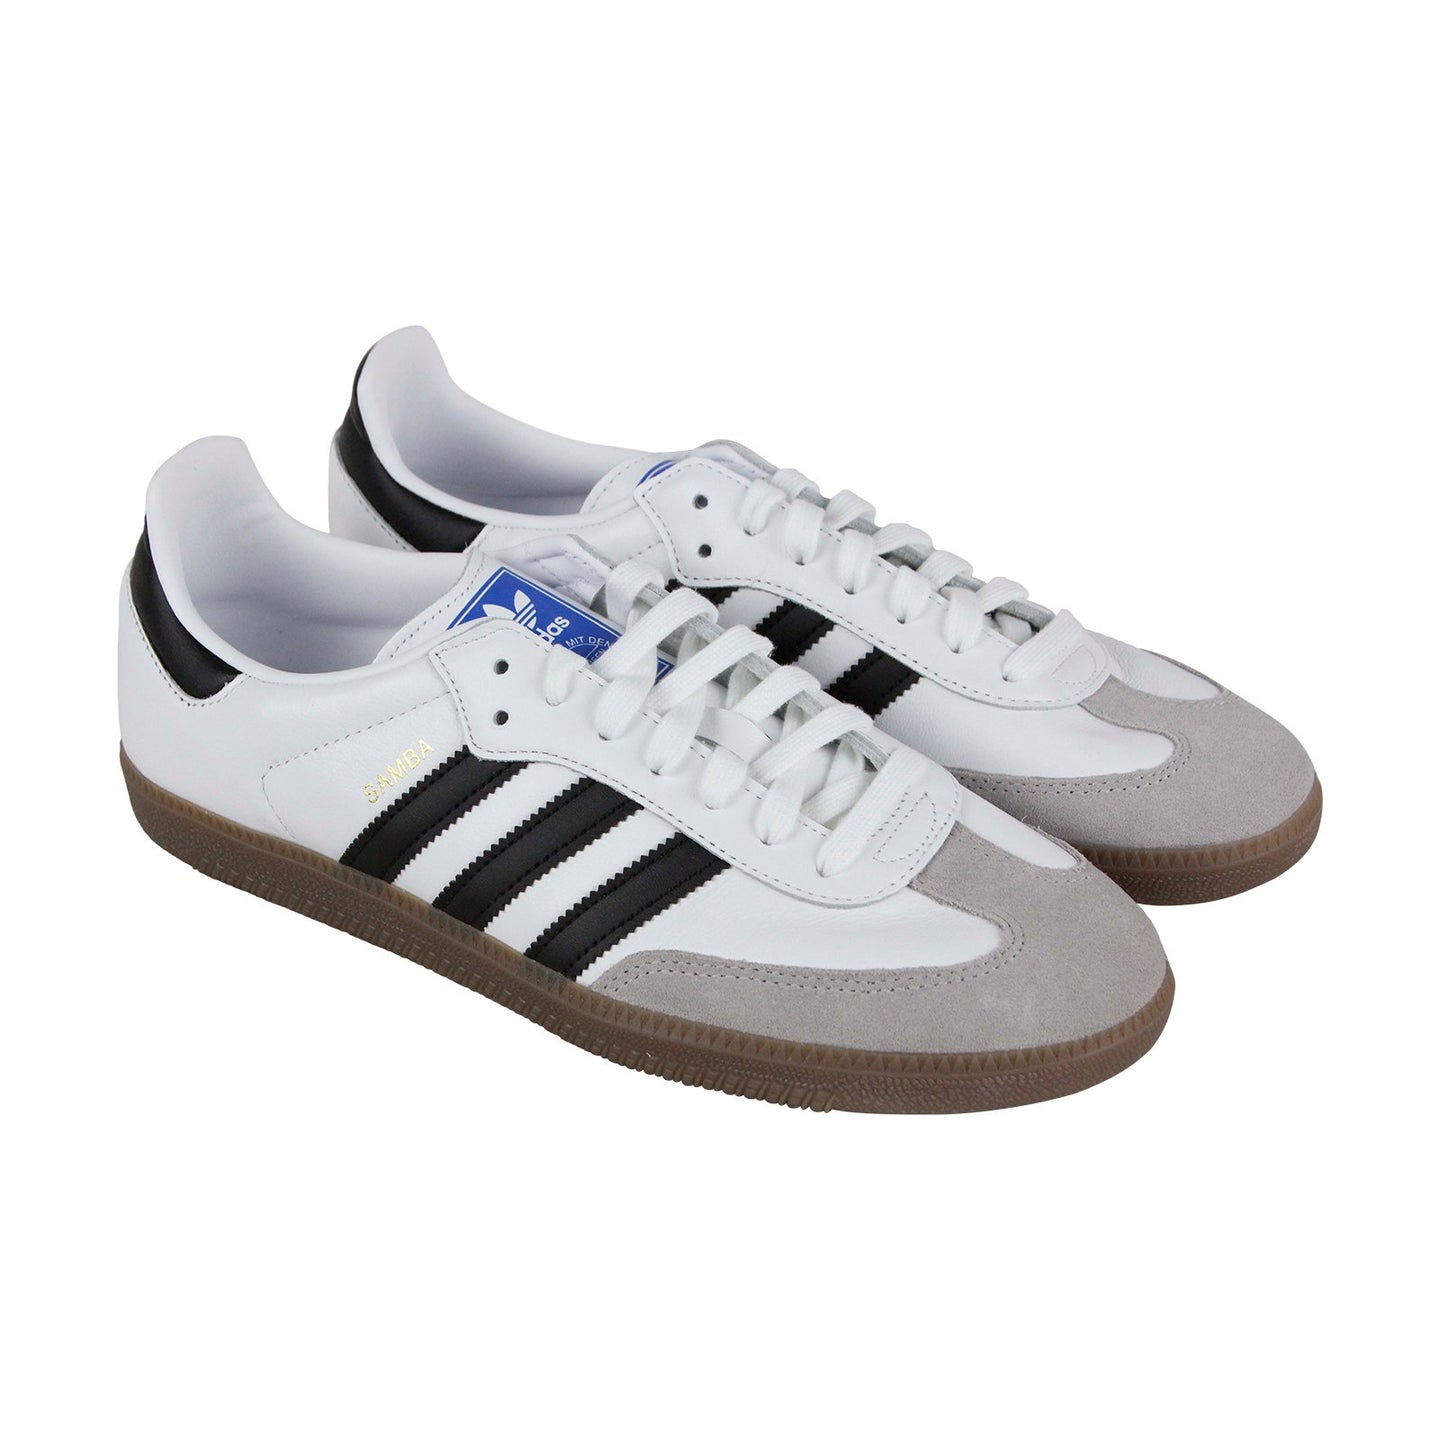 Adidas Samba Og B75806 Mens White Suede Lace Up Lifestyle Sneakers Sho ...